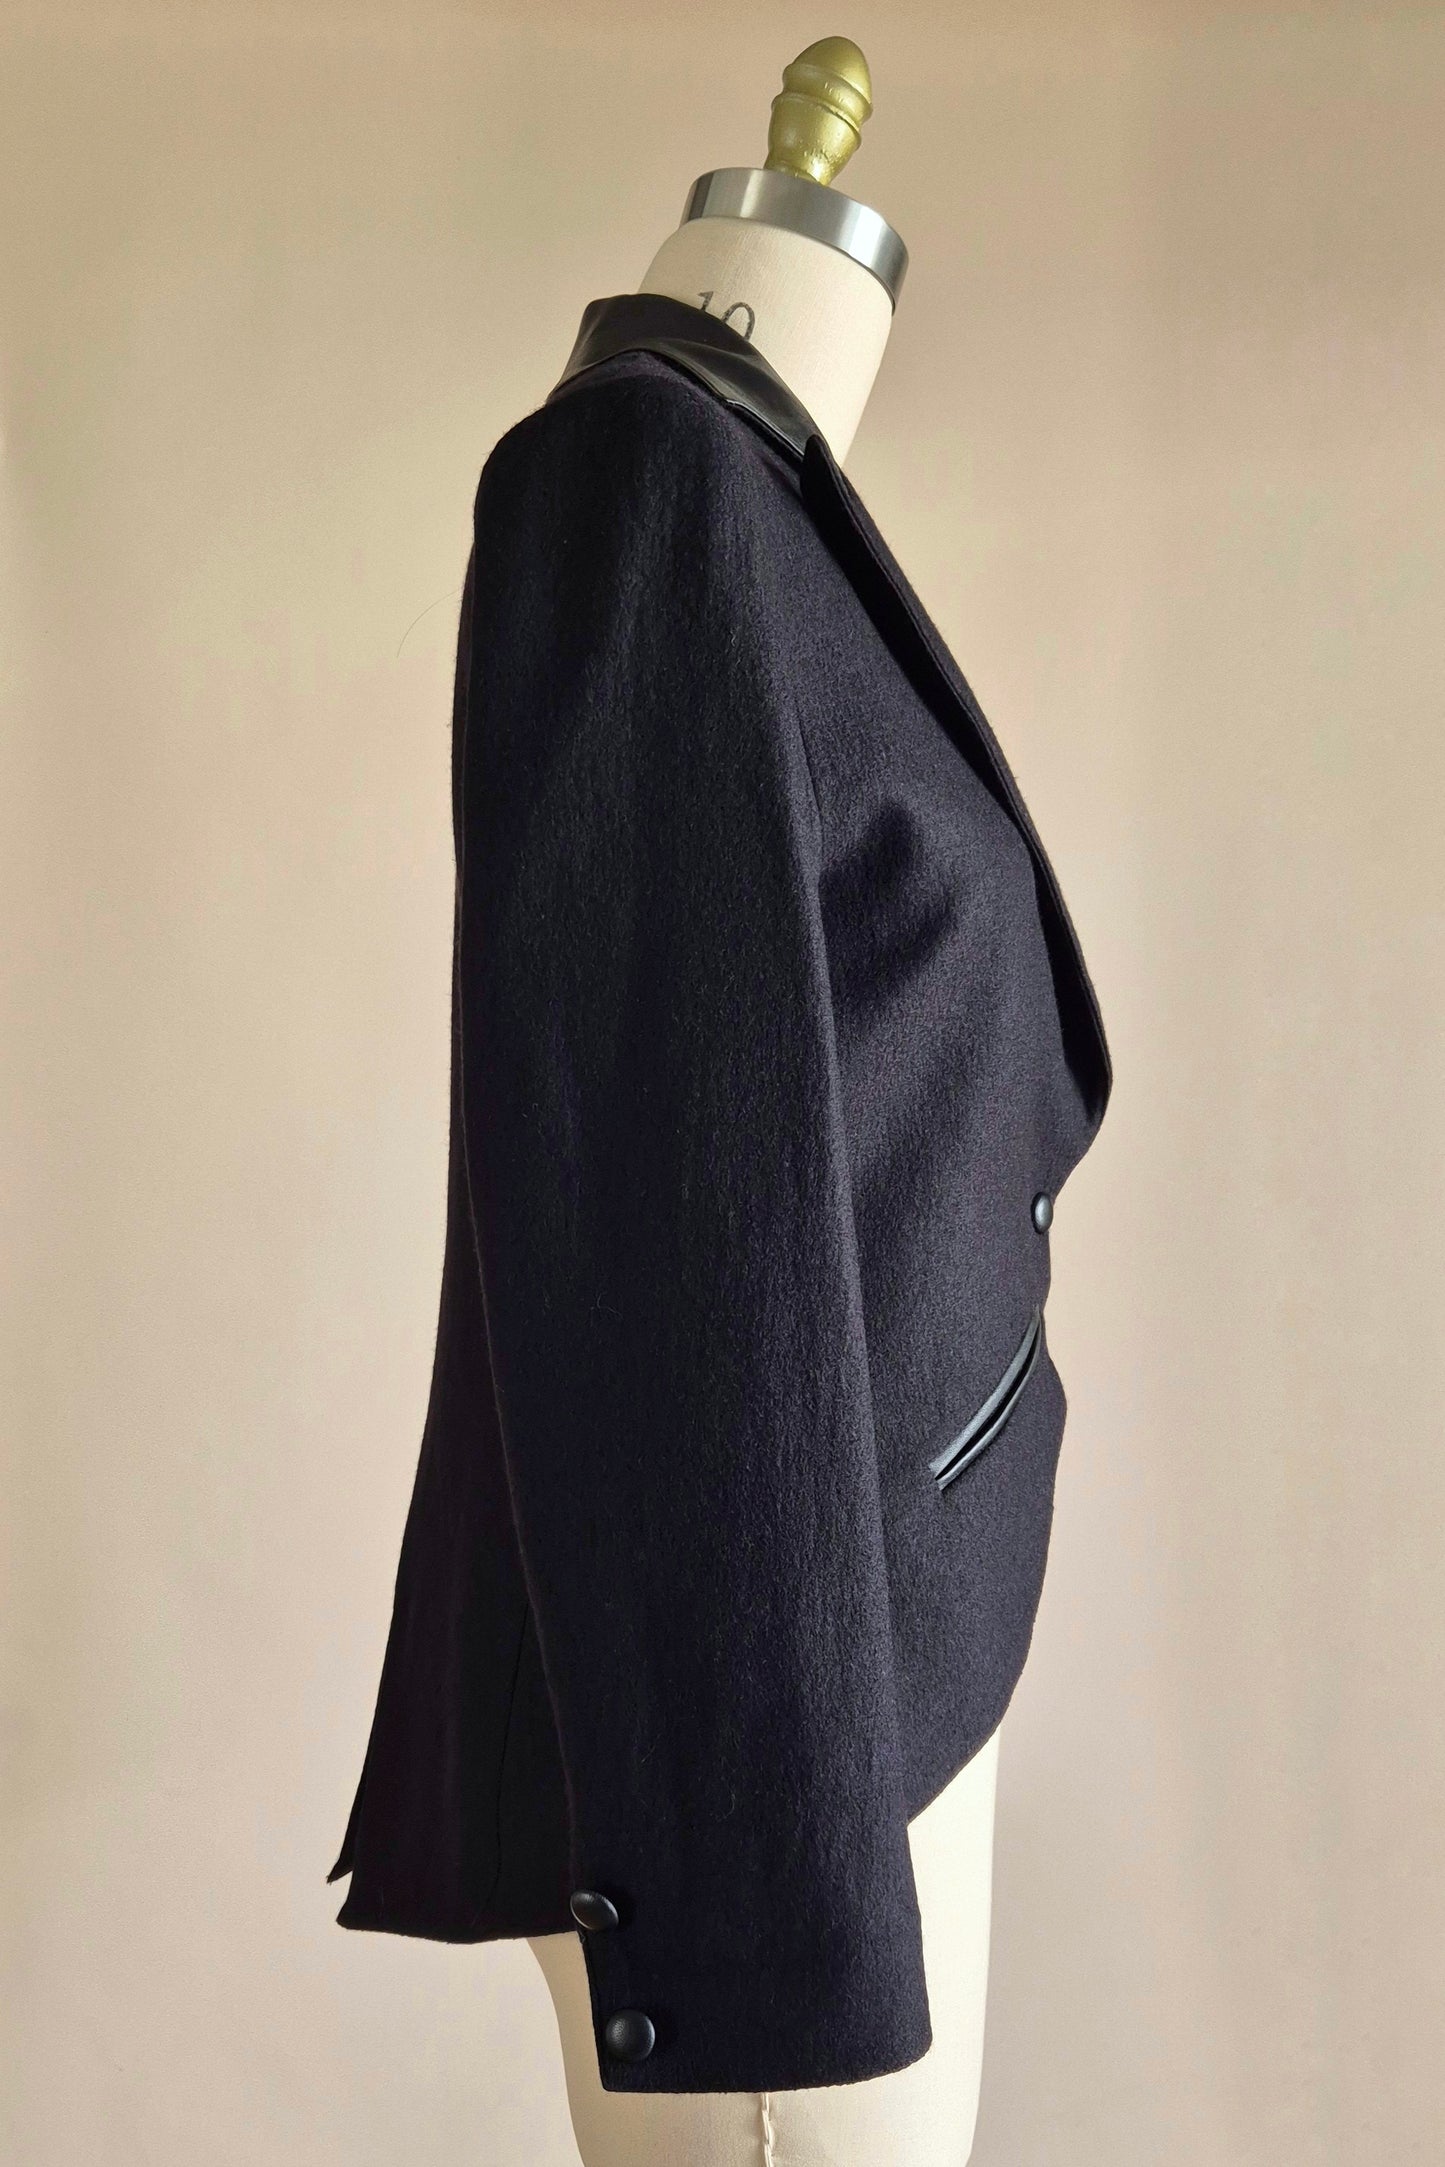 Fabulous merino wool tuxedo style jacket Size S/M